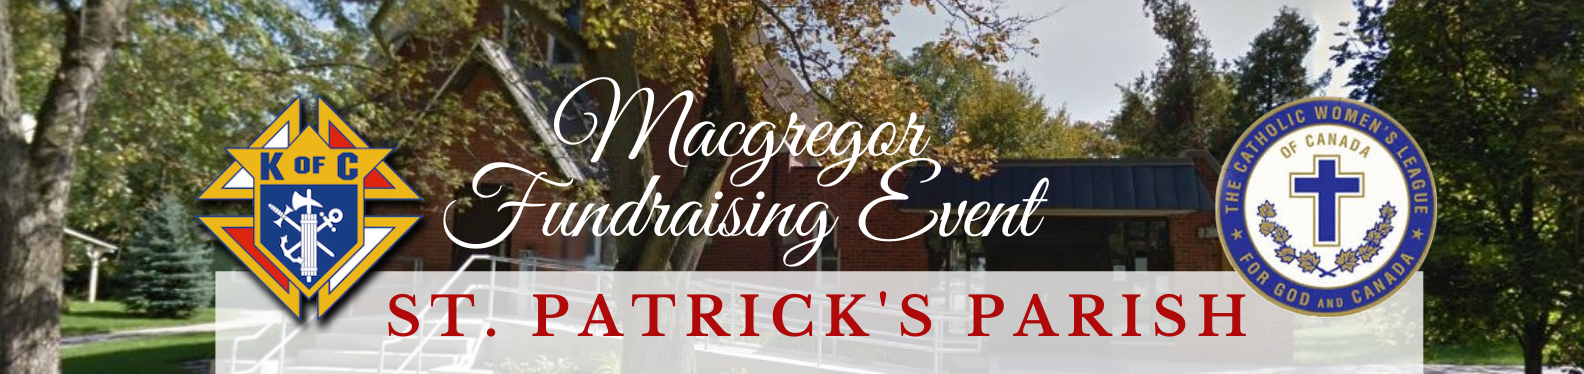 Macgregor Fundraiser Banner 2021